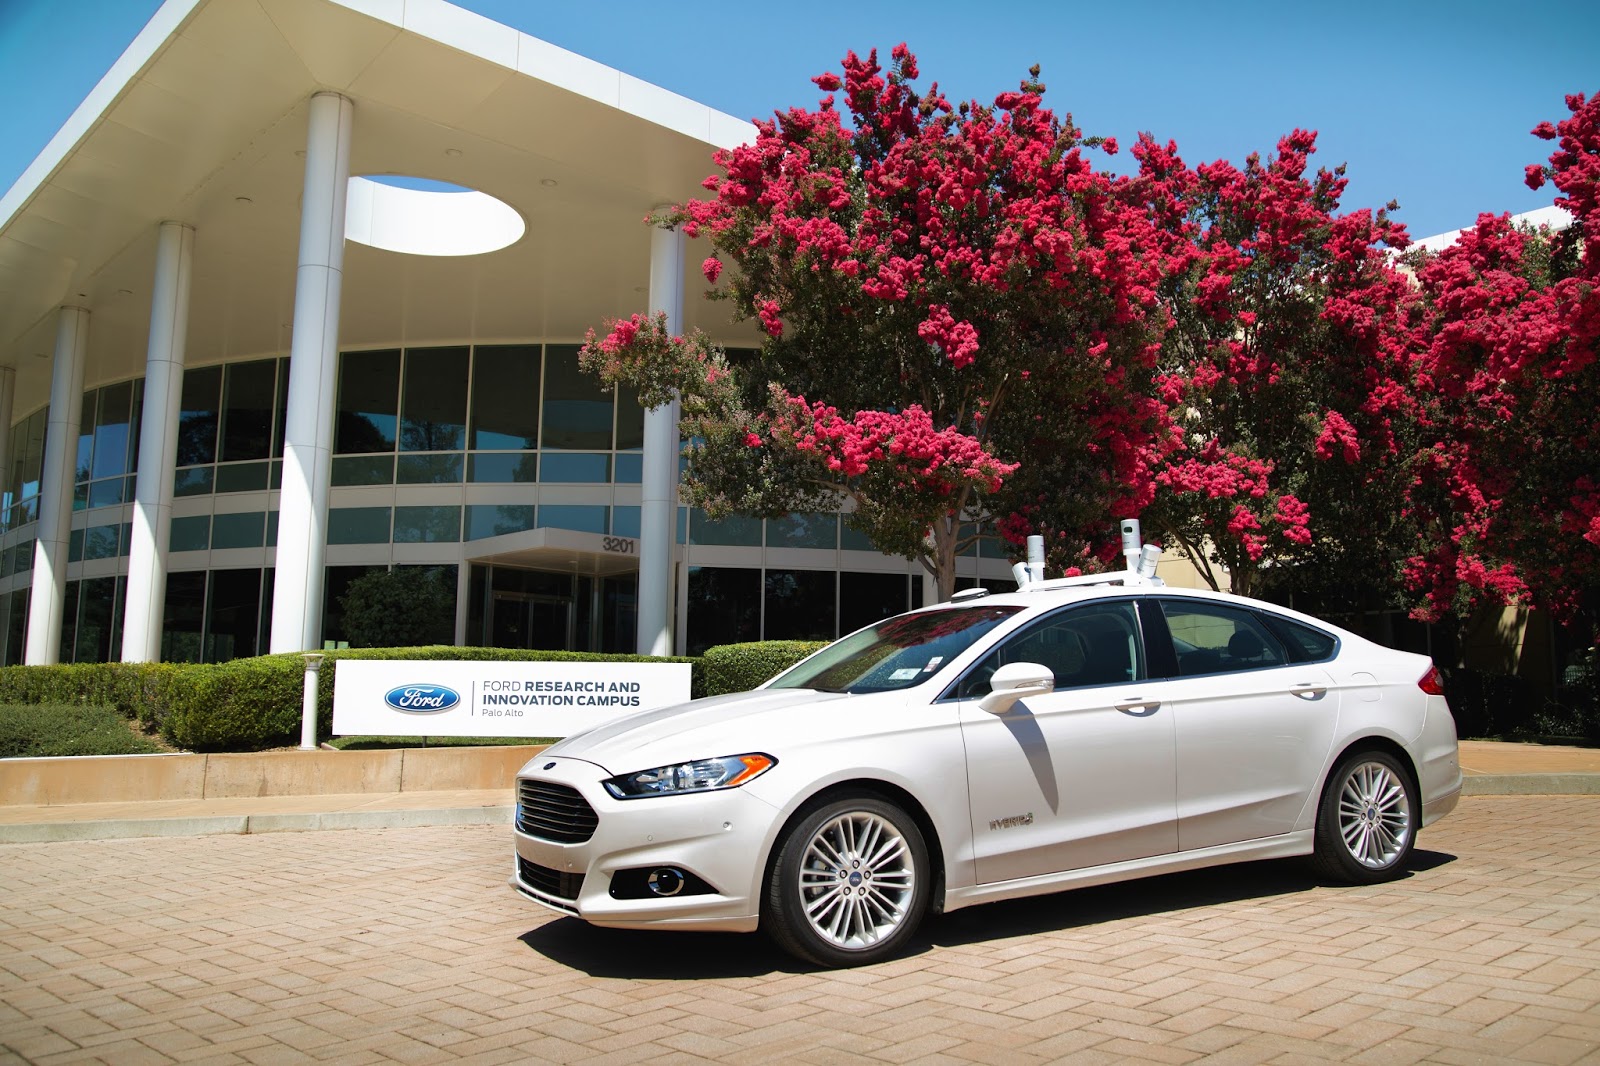 New Ford RIC Building with AV Η Ford στοχεύει να βγάλει σε μαζική παραγωγή ένα πλήρως αυτόνομο όχημα το 2021